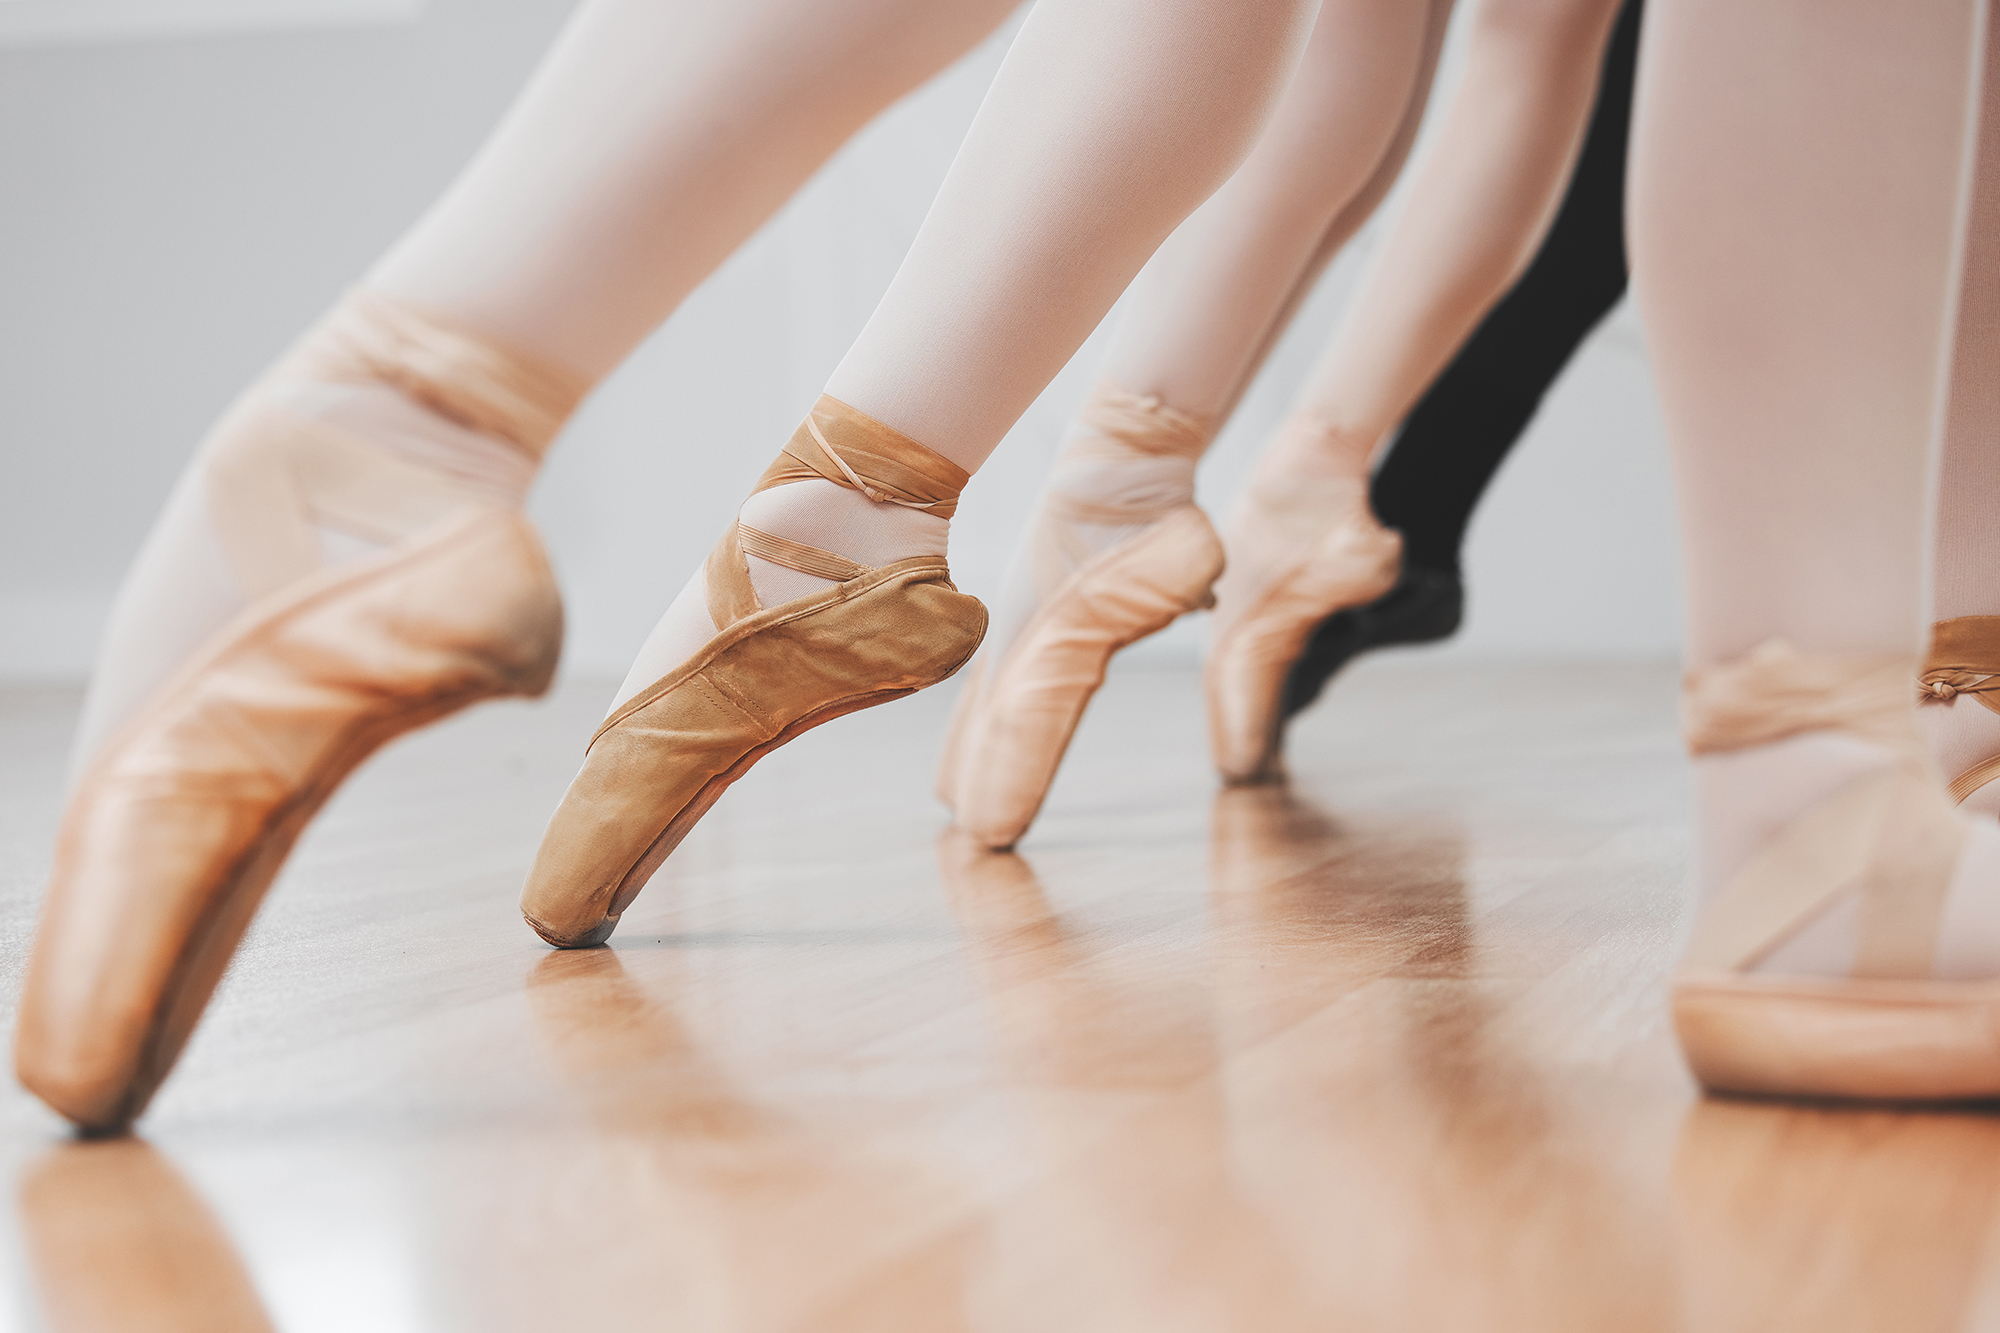 Ballett (Illustrationsbild: © PantherMedia /PeopleImages.com)